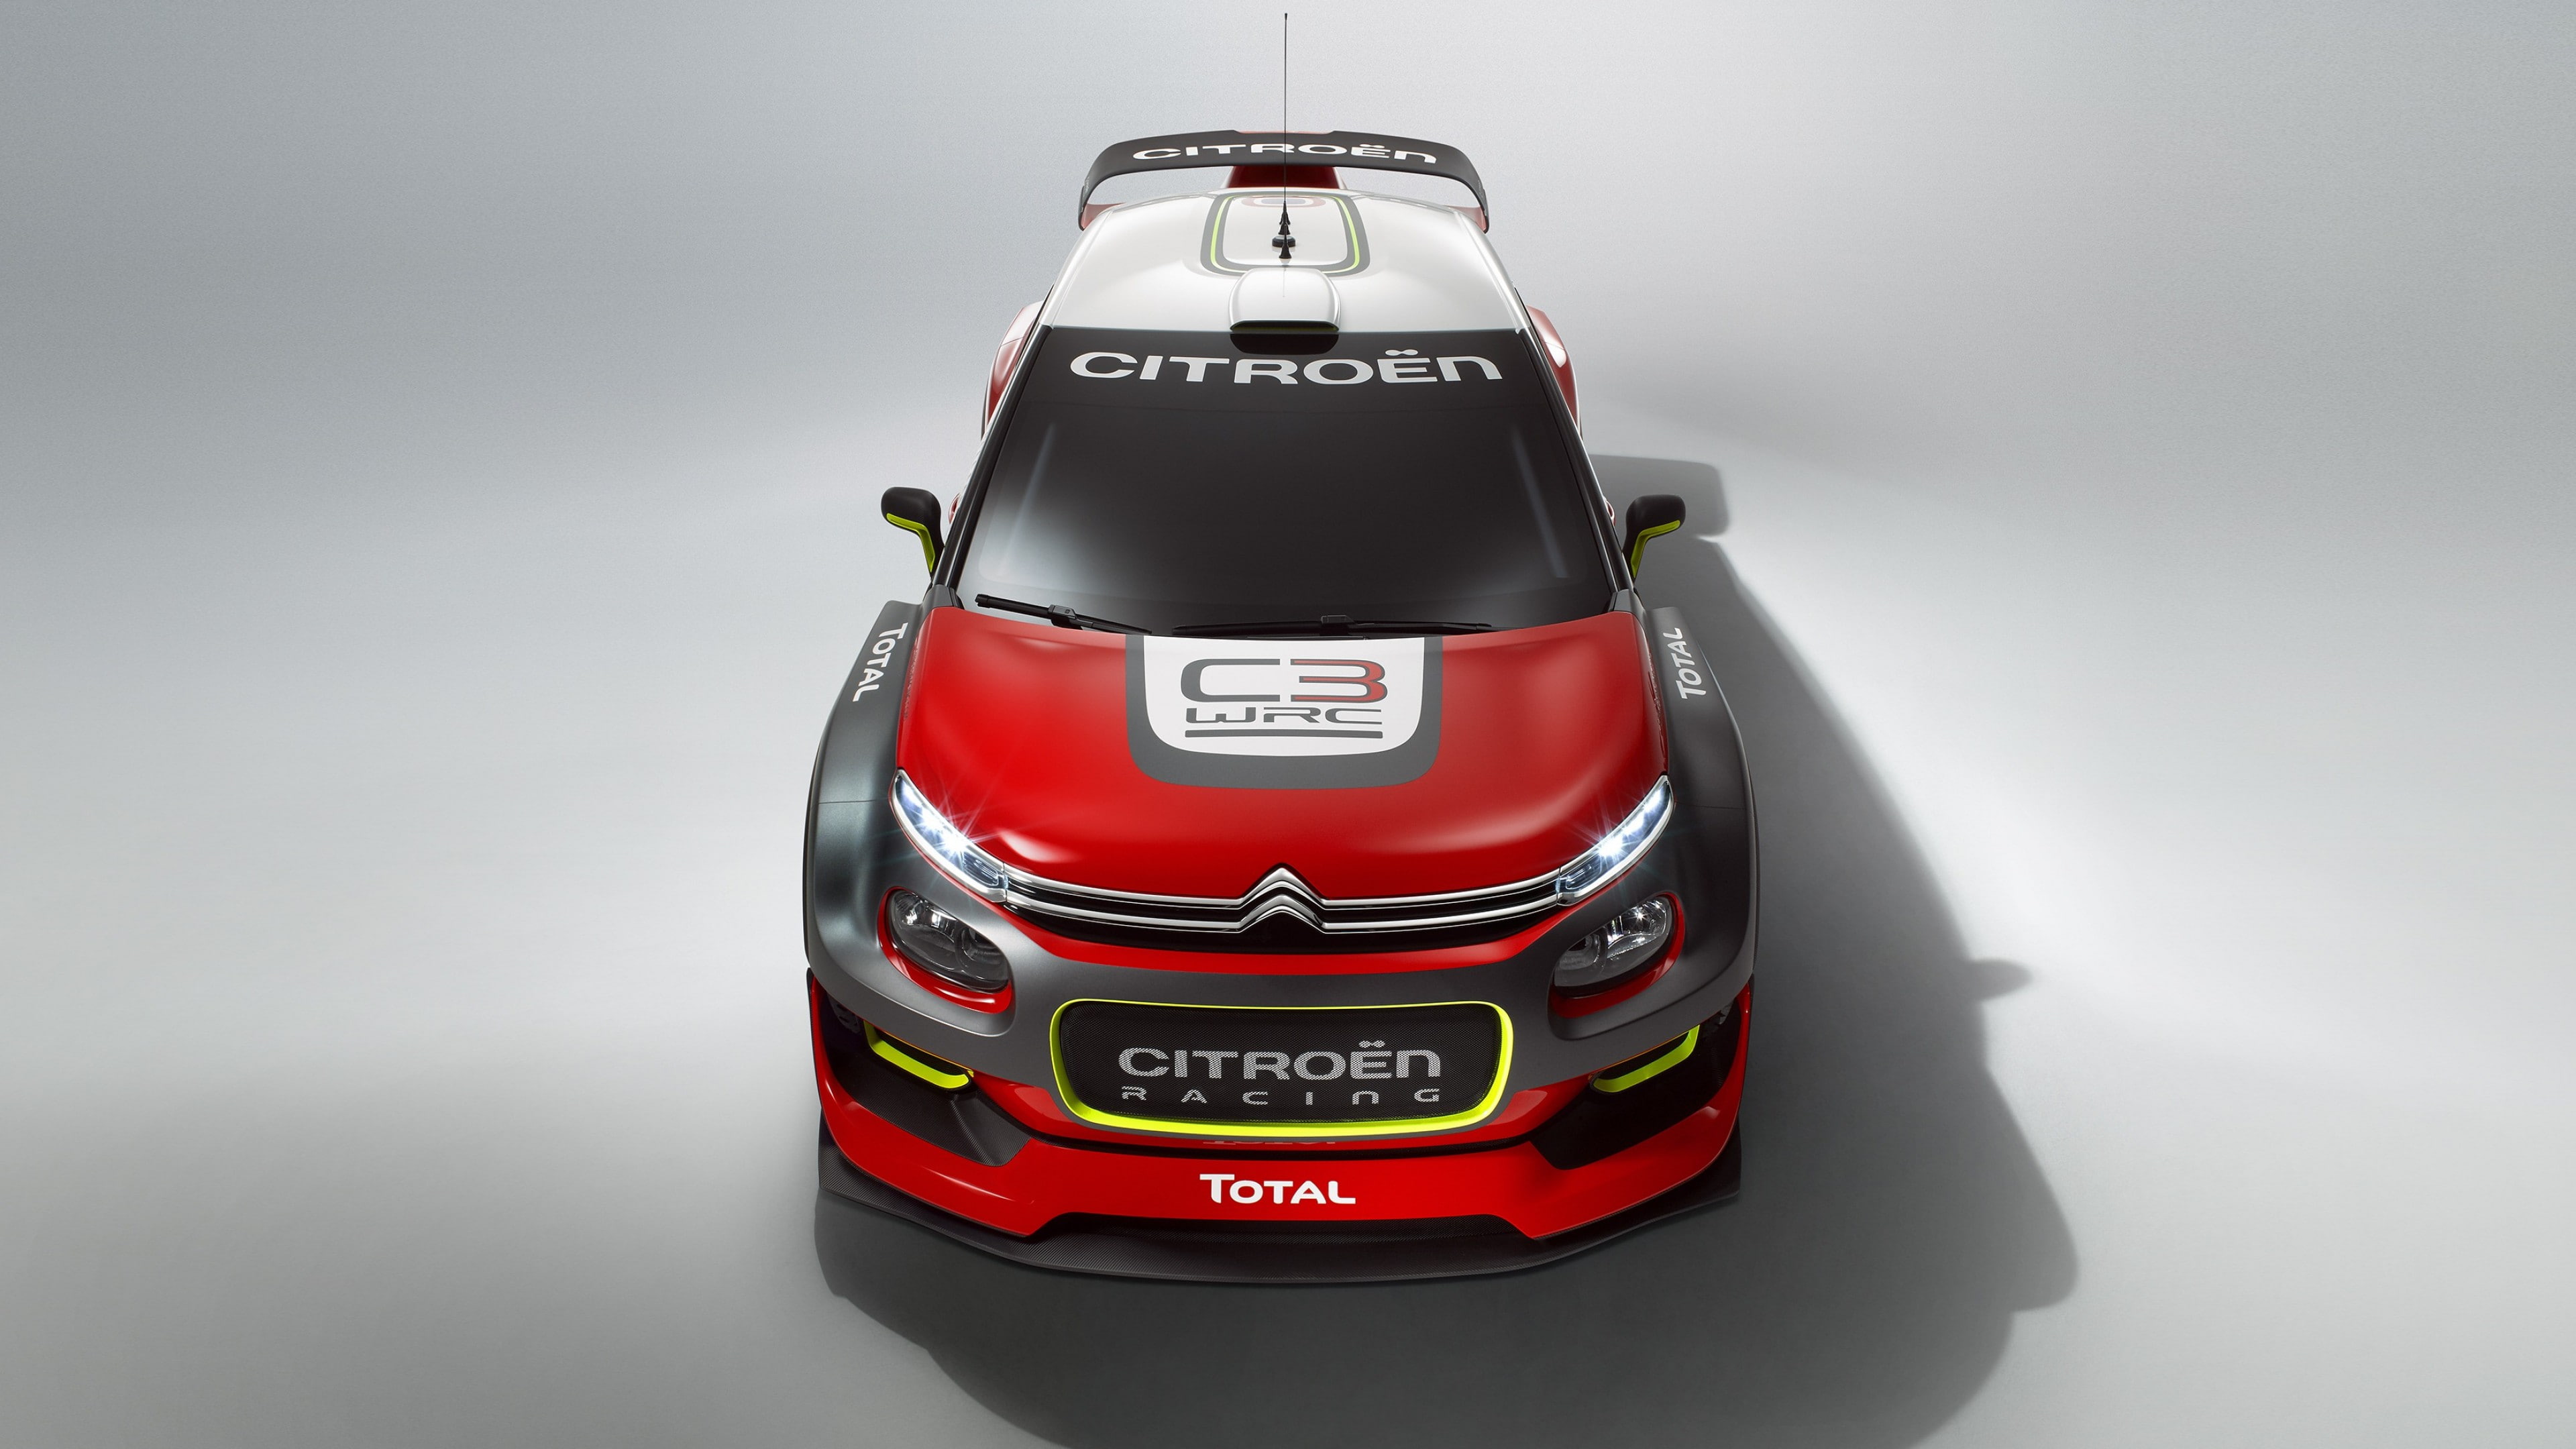 red and white Citroen C3 rally car, Citroen C3 WRC, paris auto show 2016